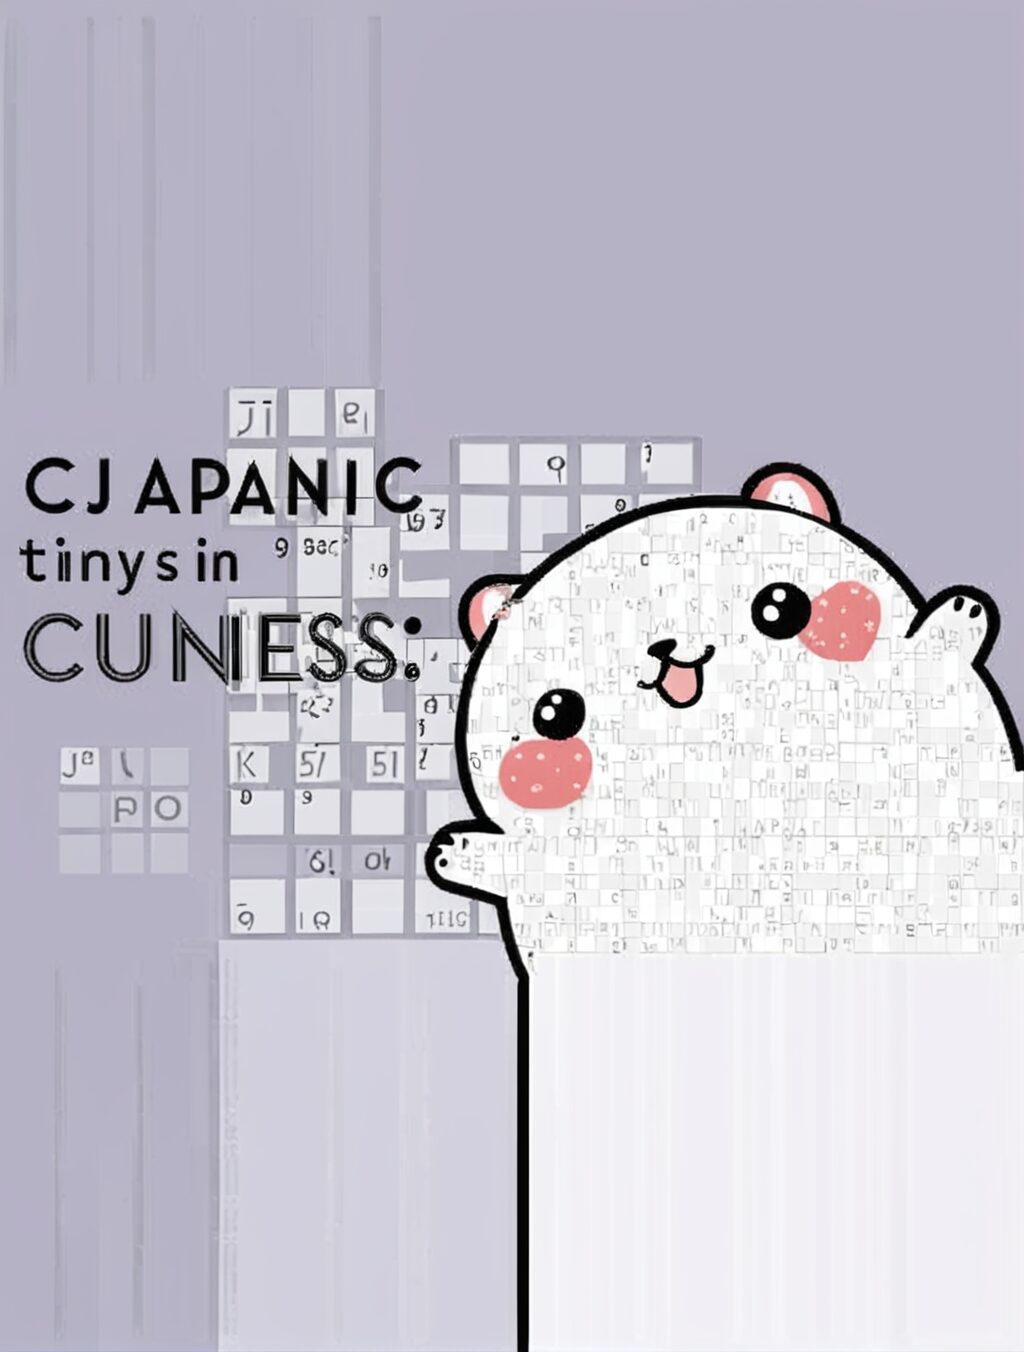 culture of cuteness in japan crossword clue